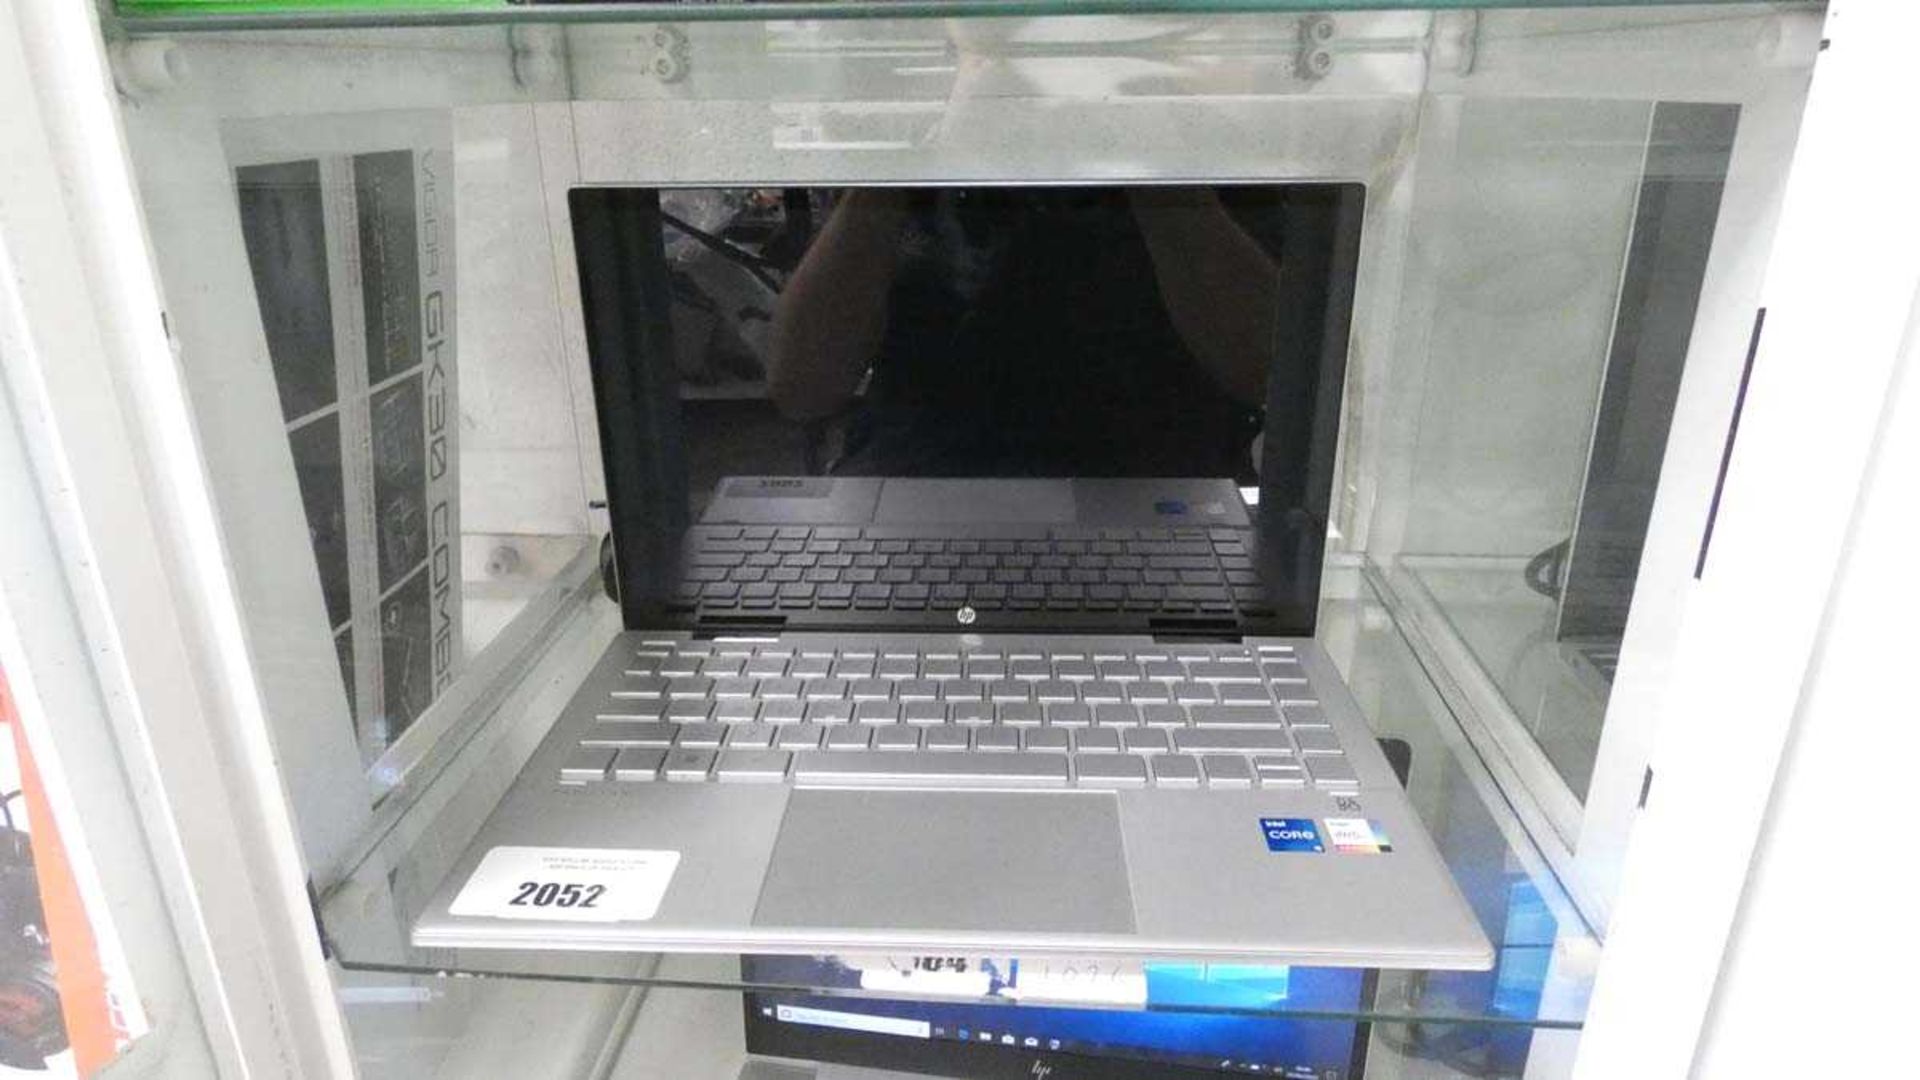 +VAT HP Pavilion X360 laptop, core i5 11th generation processor, 8GB RAM, 512GB storage, running